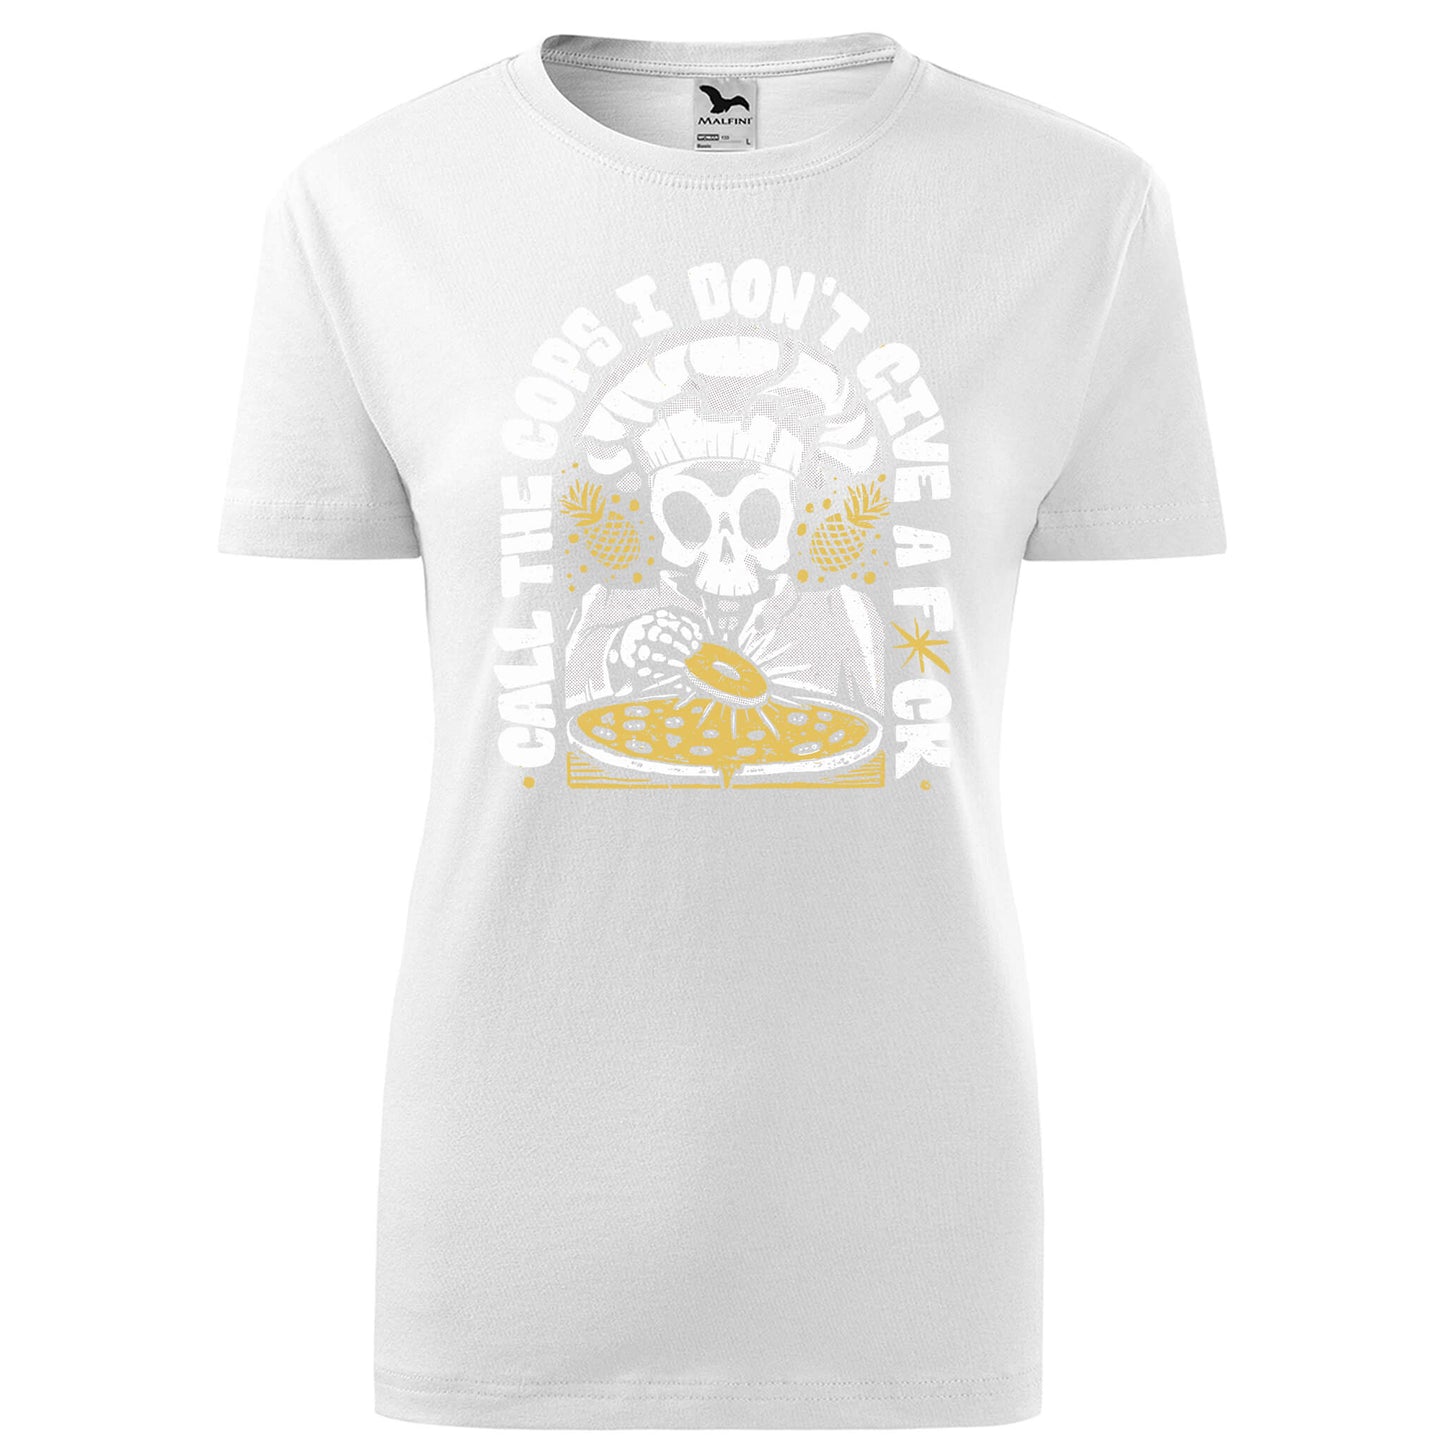 Pineapple pizza idgaf t-shirt - rvdesignprint